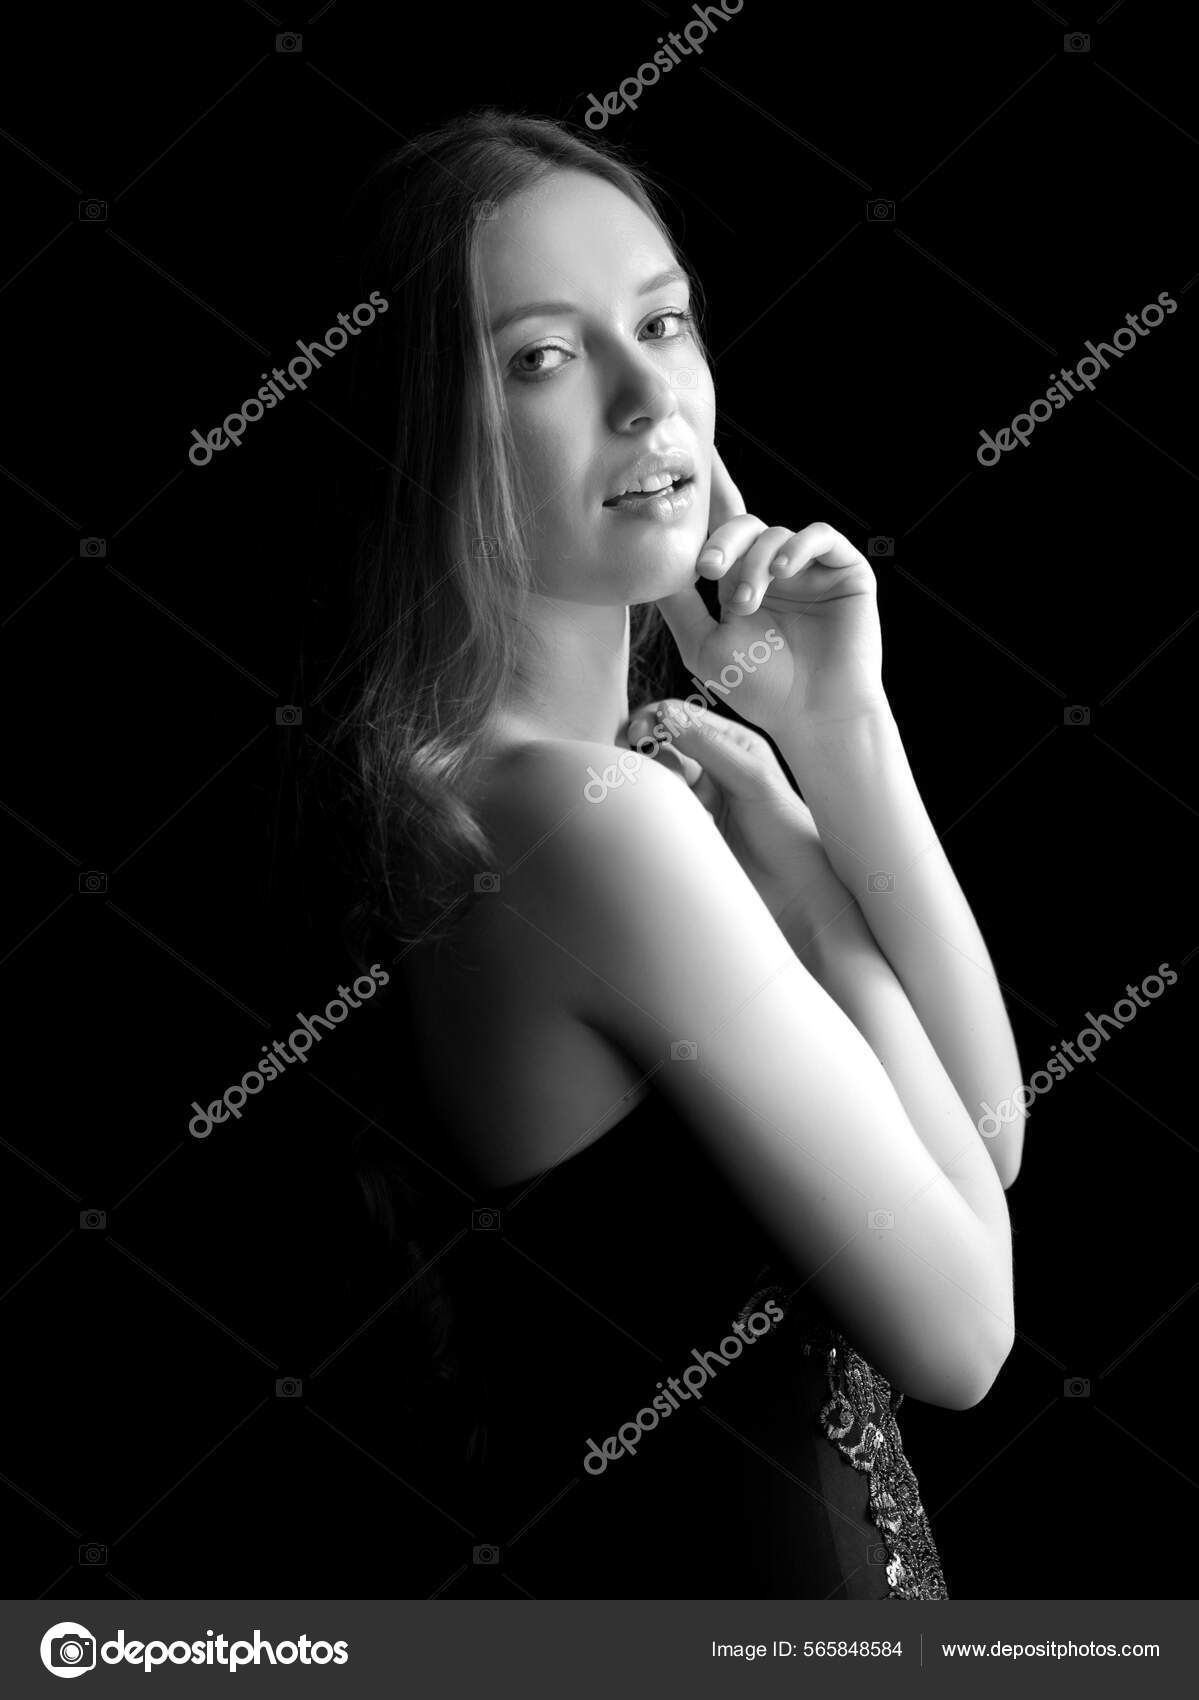 https://st.depositphotos.com/1012146/56584/i/1600/depositphotos_565848[001-999]-stock-photo-beautiful-sexy-brunette-girl-posing.jpg